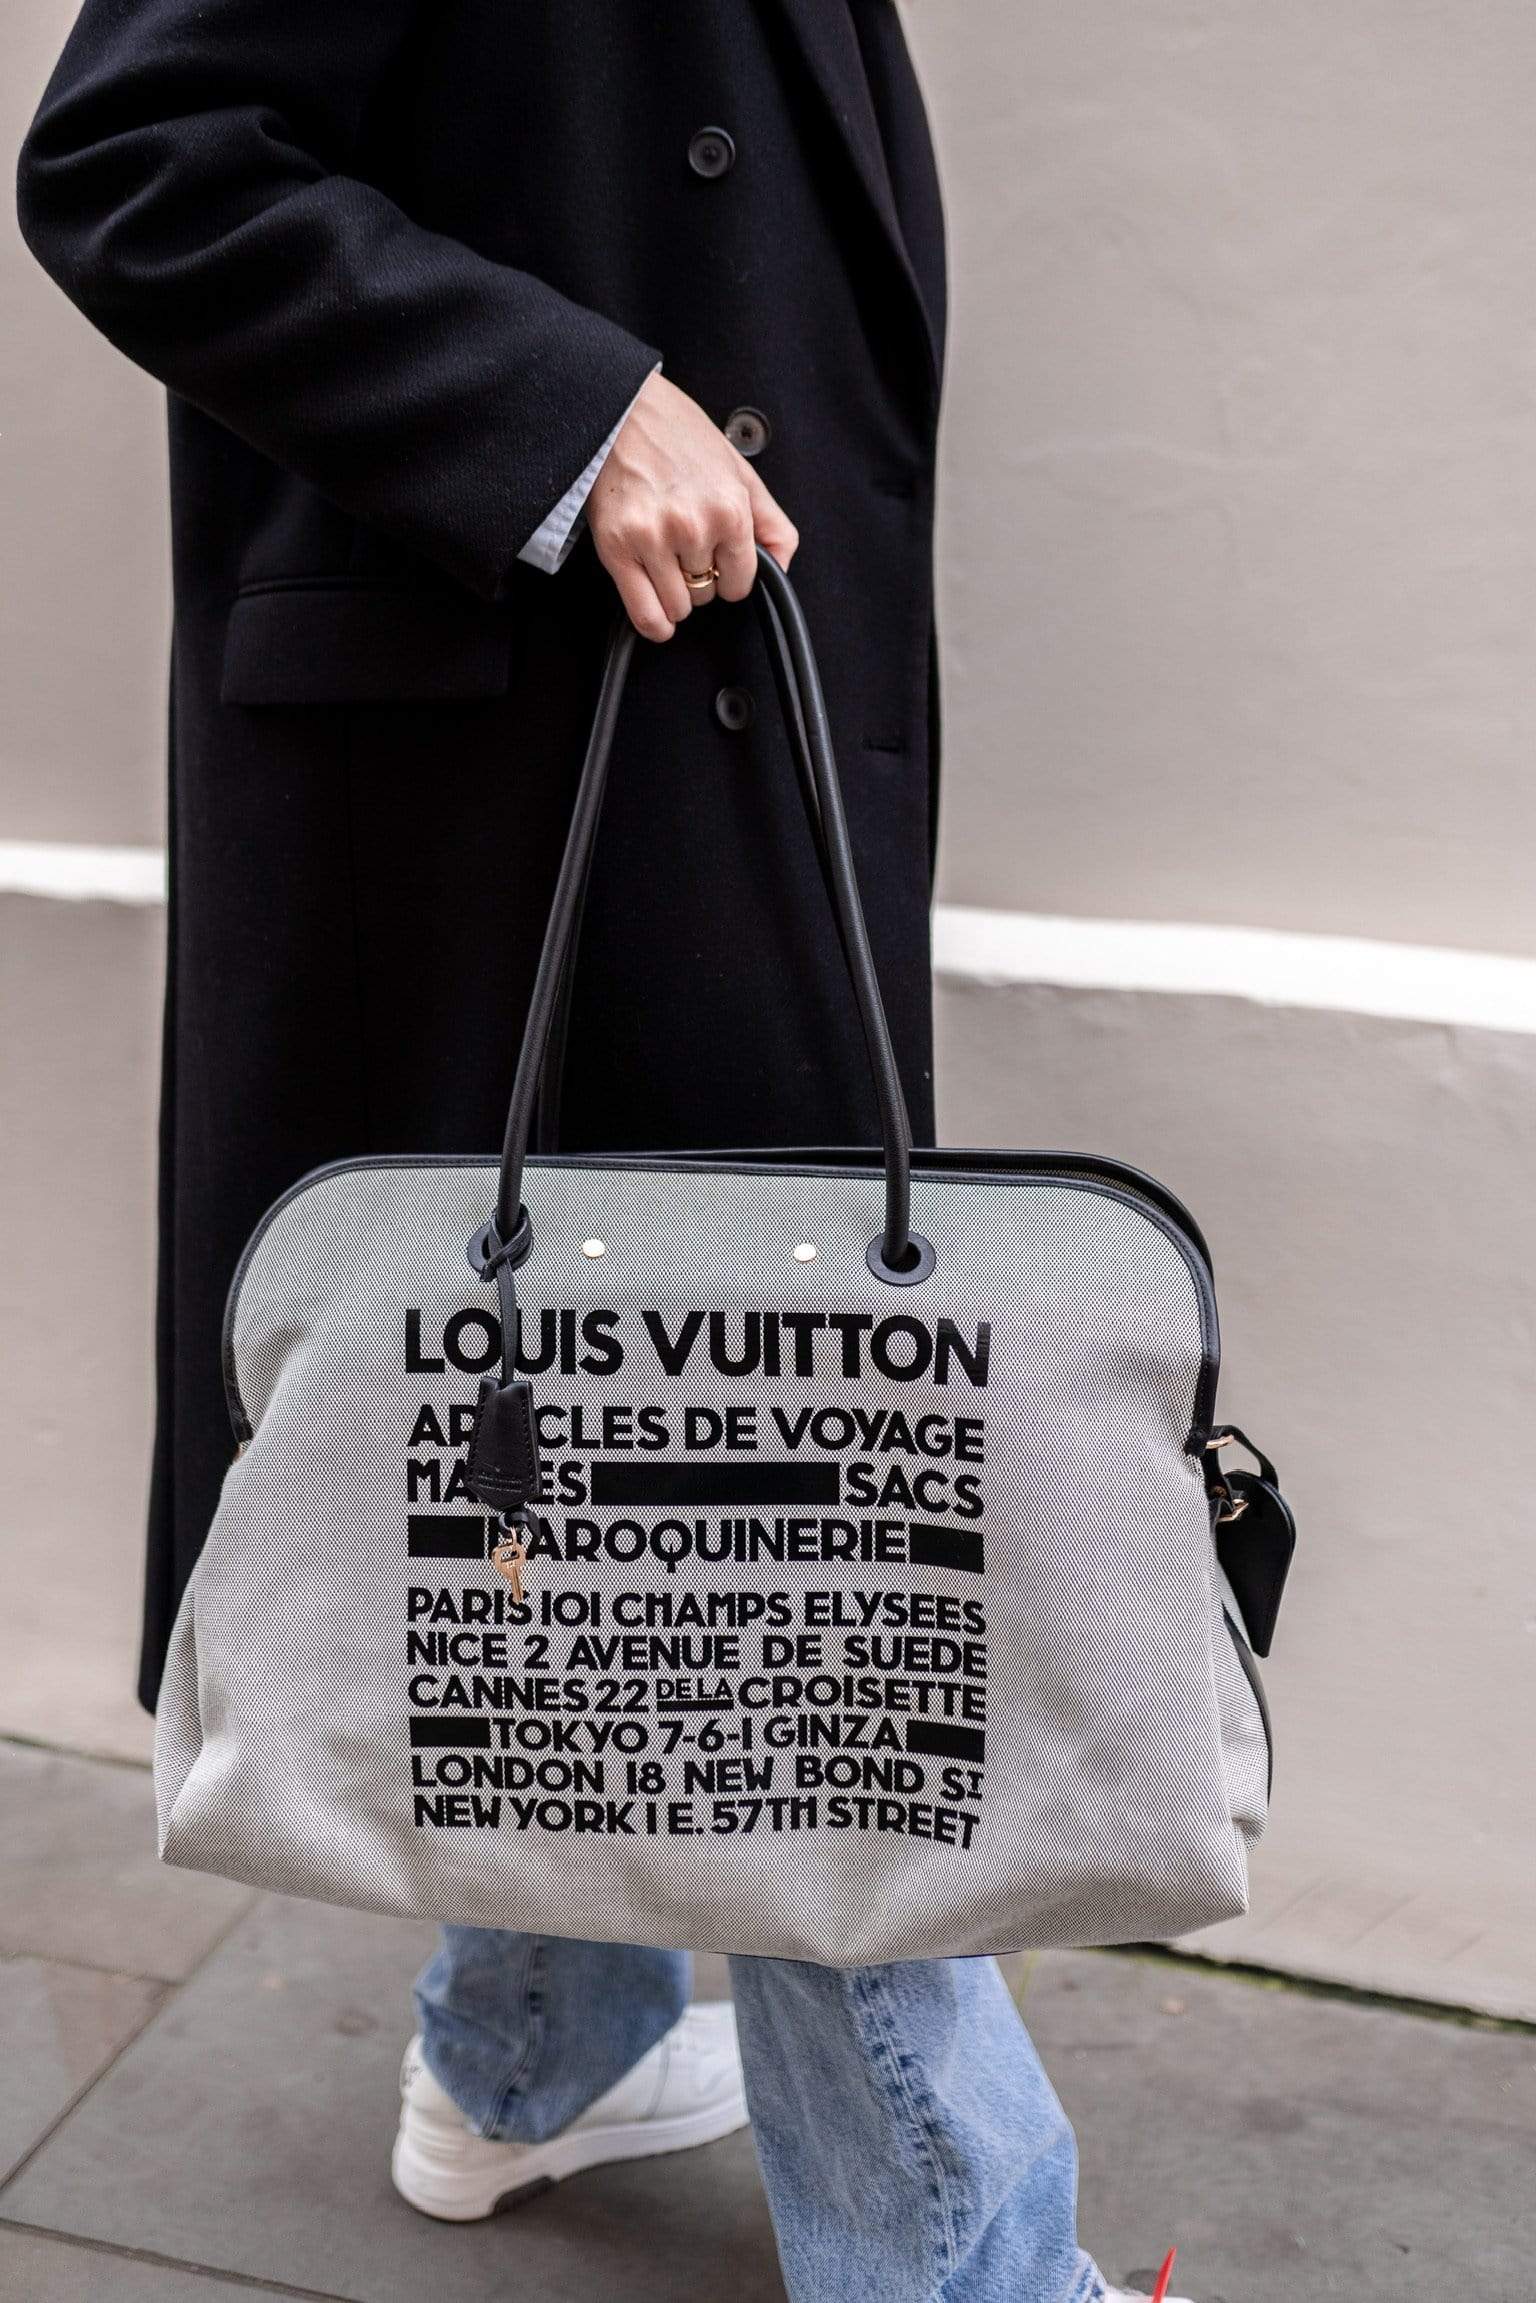 Louis Vuitton Articles De Voyage Tote - For Sale on 1stDibs